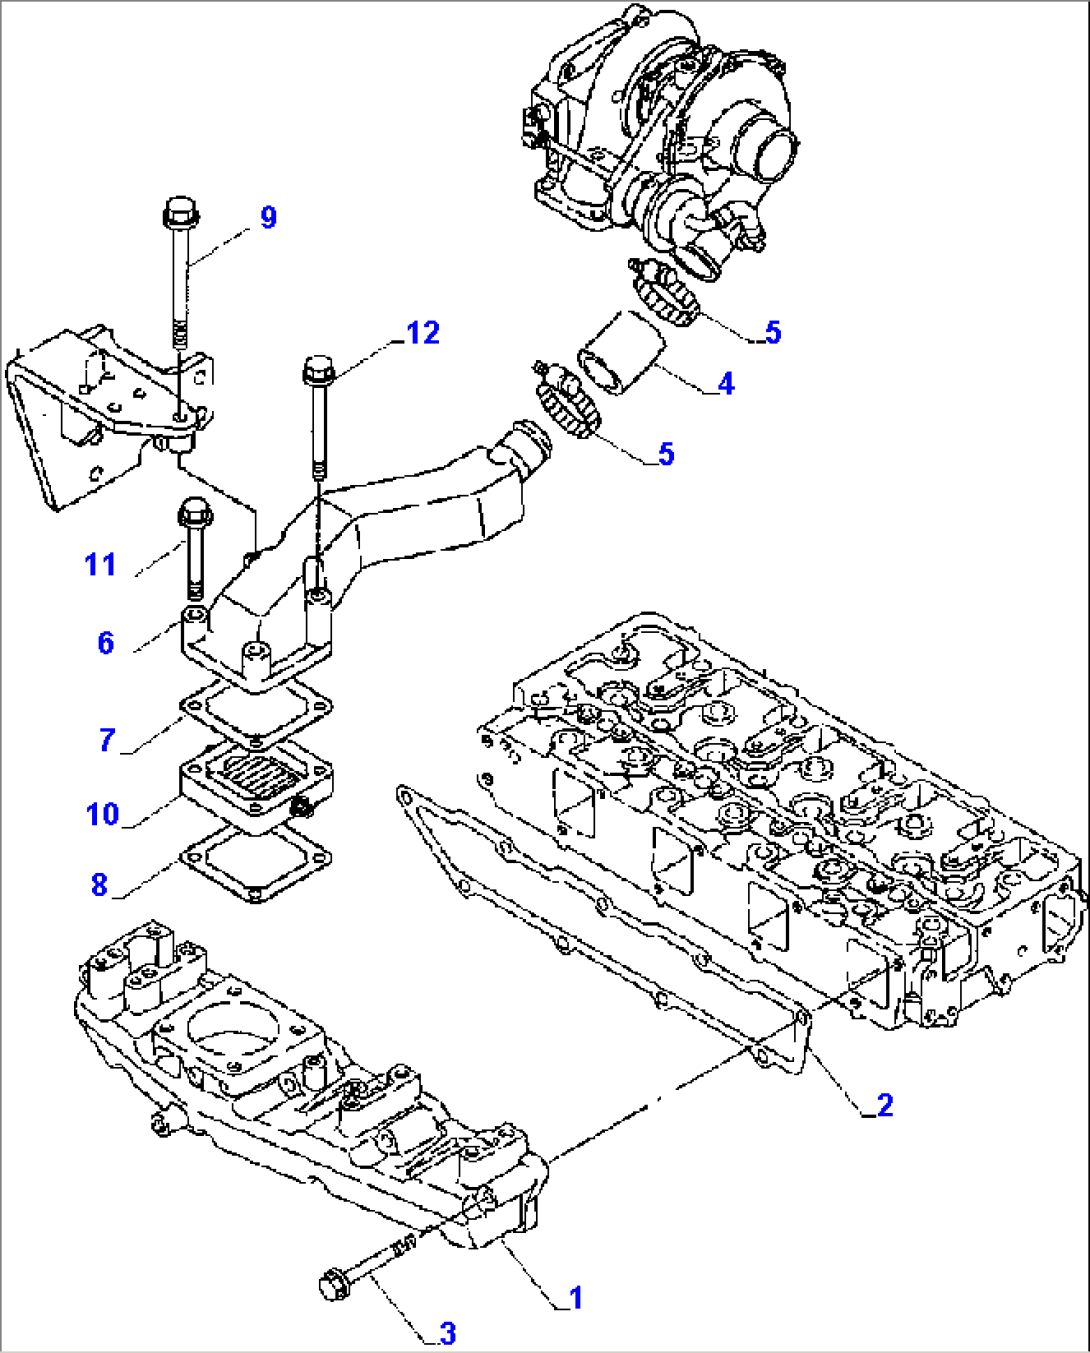 FIG. A0116-01A0 INTAKE MANIFOLD - TURBO ENGINE